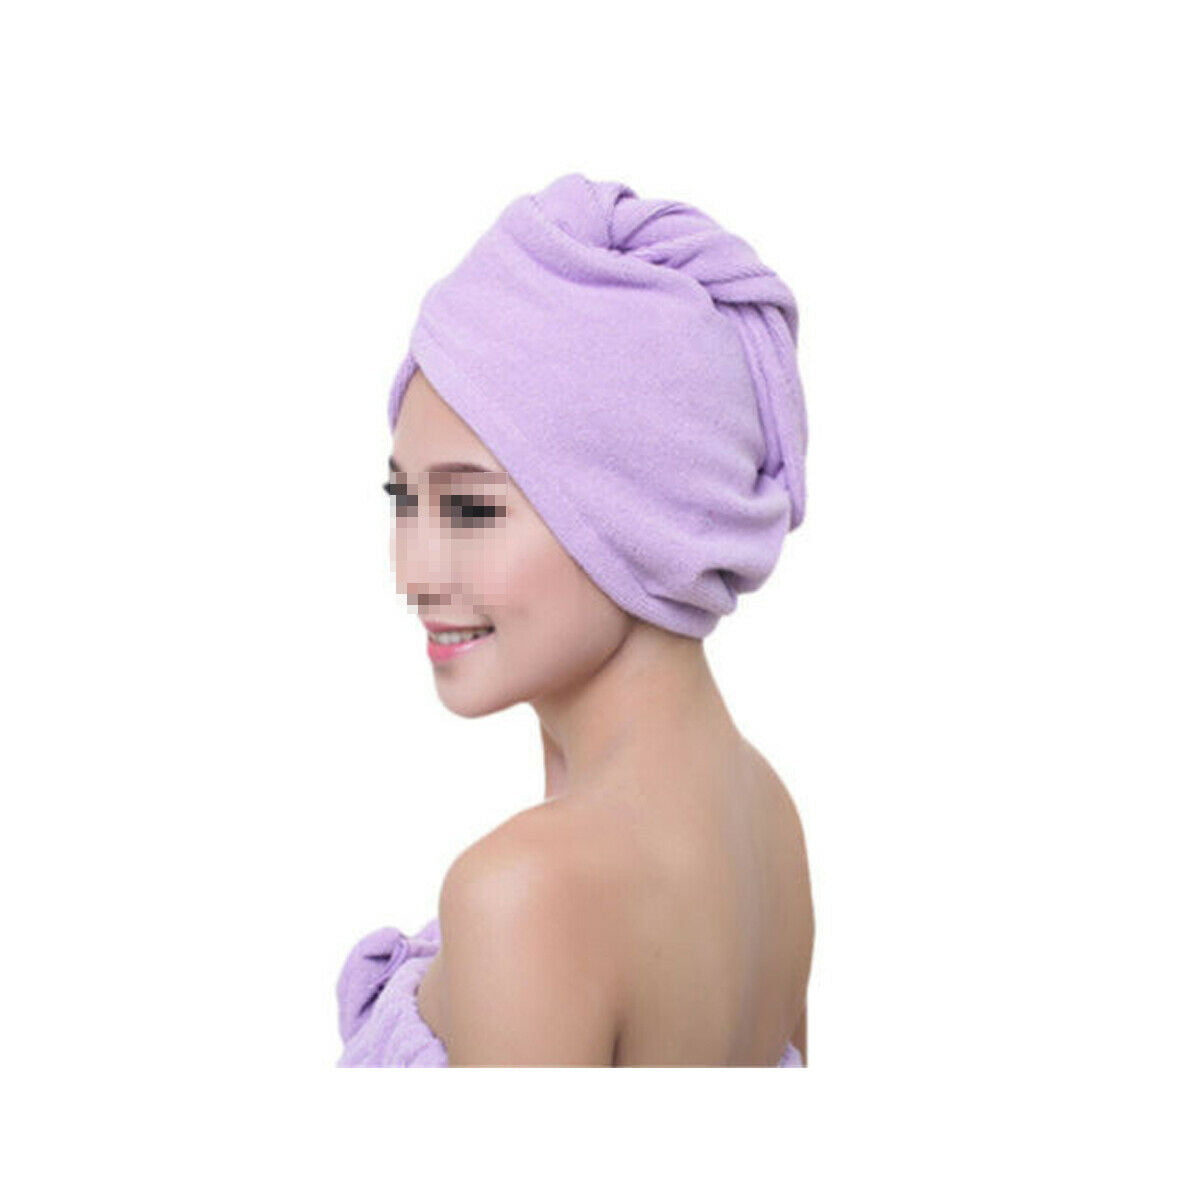 Quick Dry Microfiber Hair Towel Drying Turban Twist Bath Spa Hair Wrap Hat Cap 